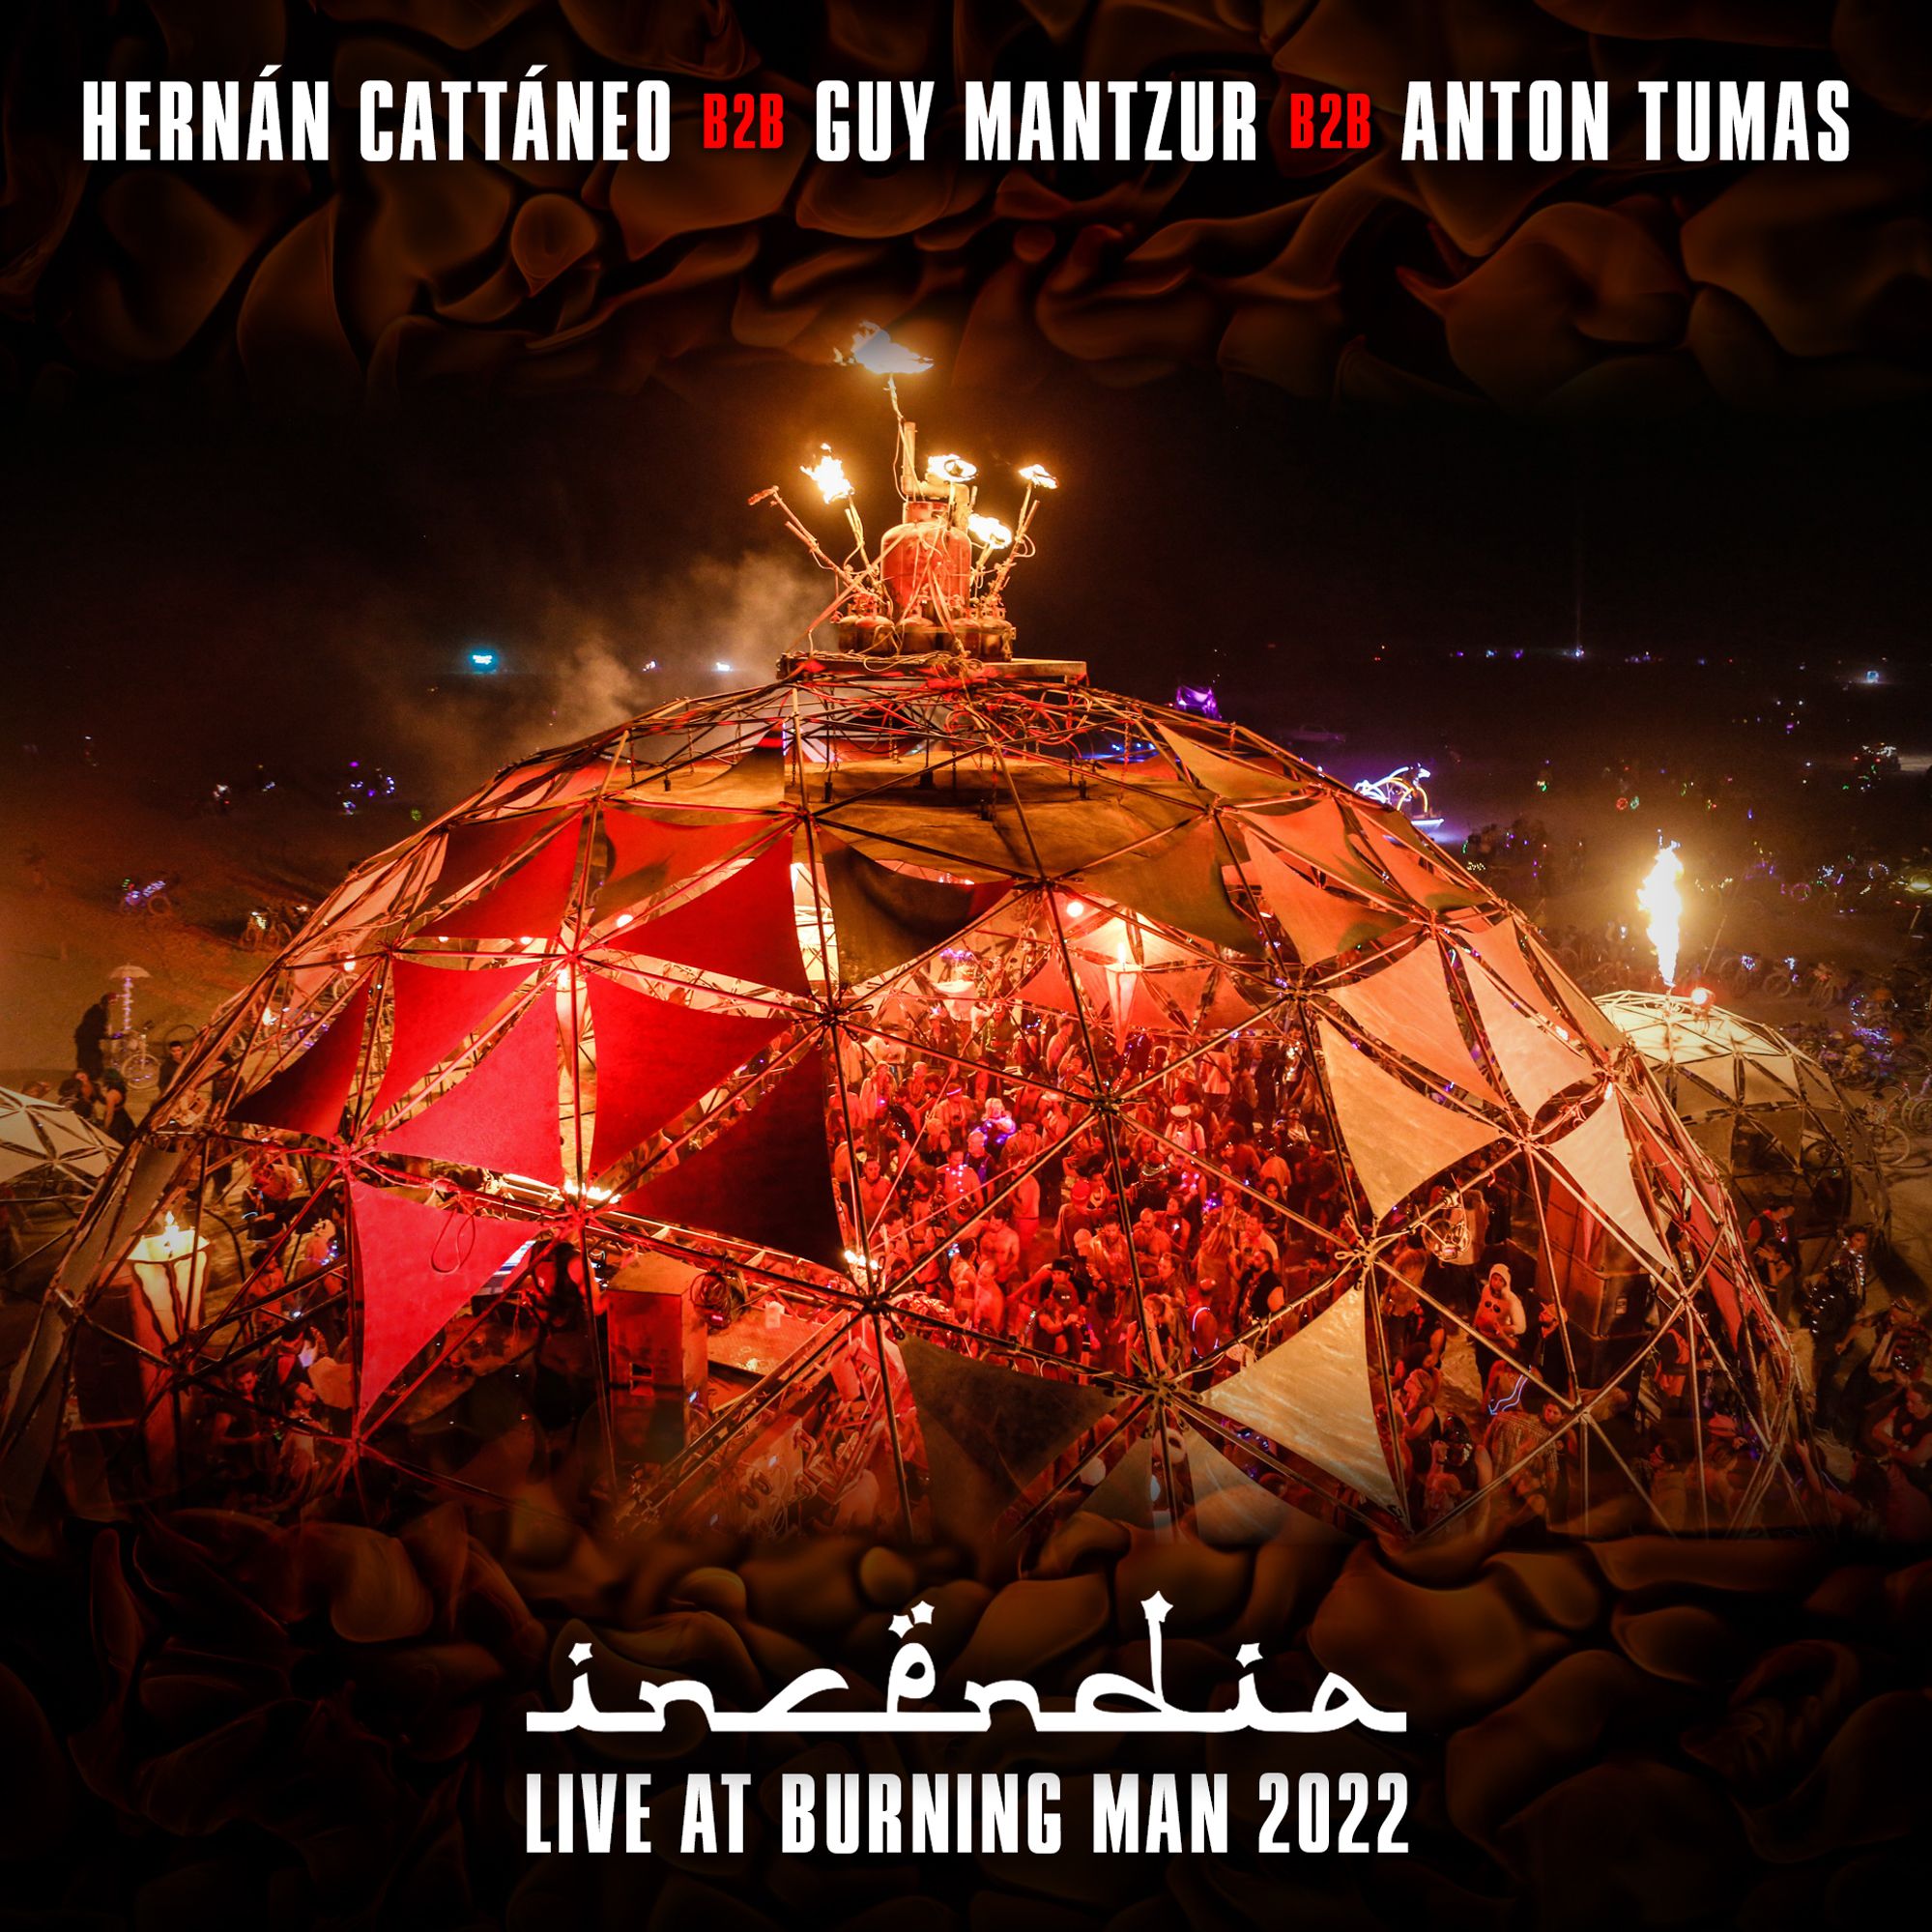 Download! Hernan Cattaneo, Guy Mantzur, Anton Tumas B3B - Incendia / Burning Man 2022